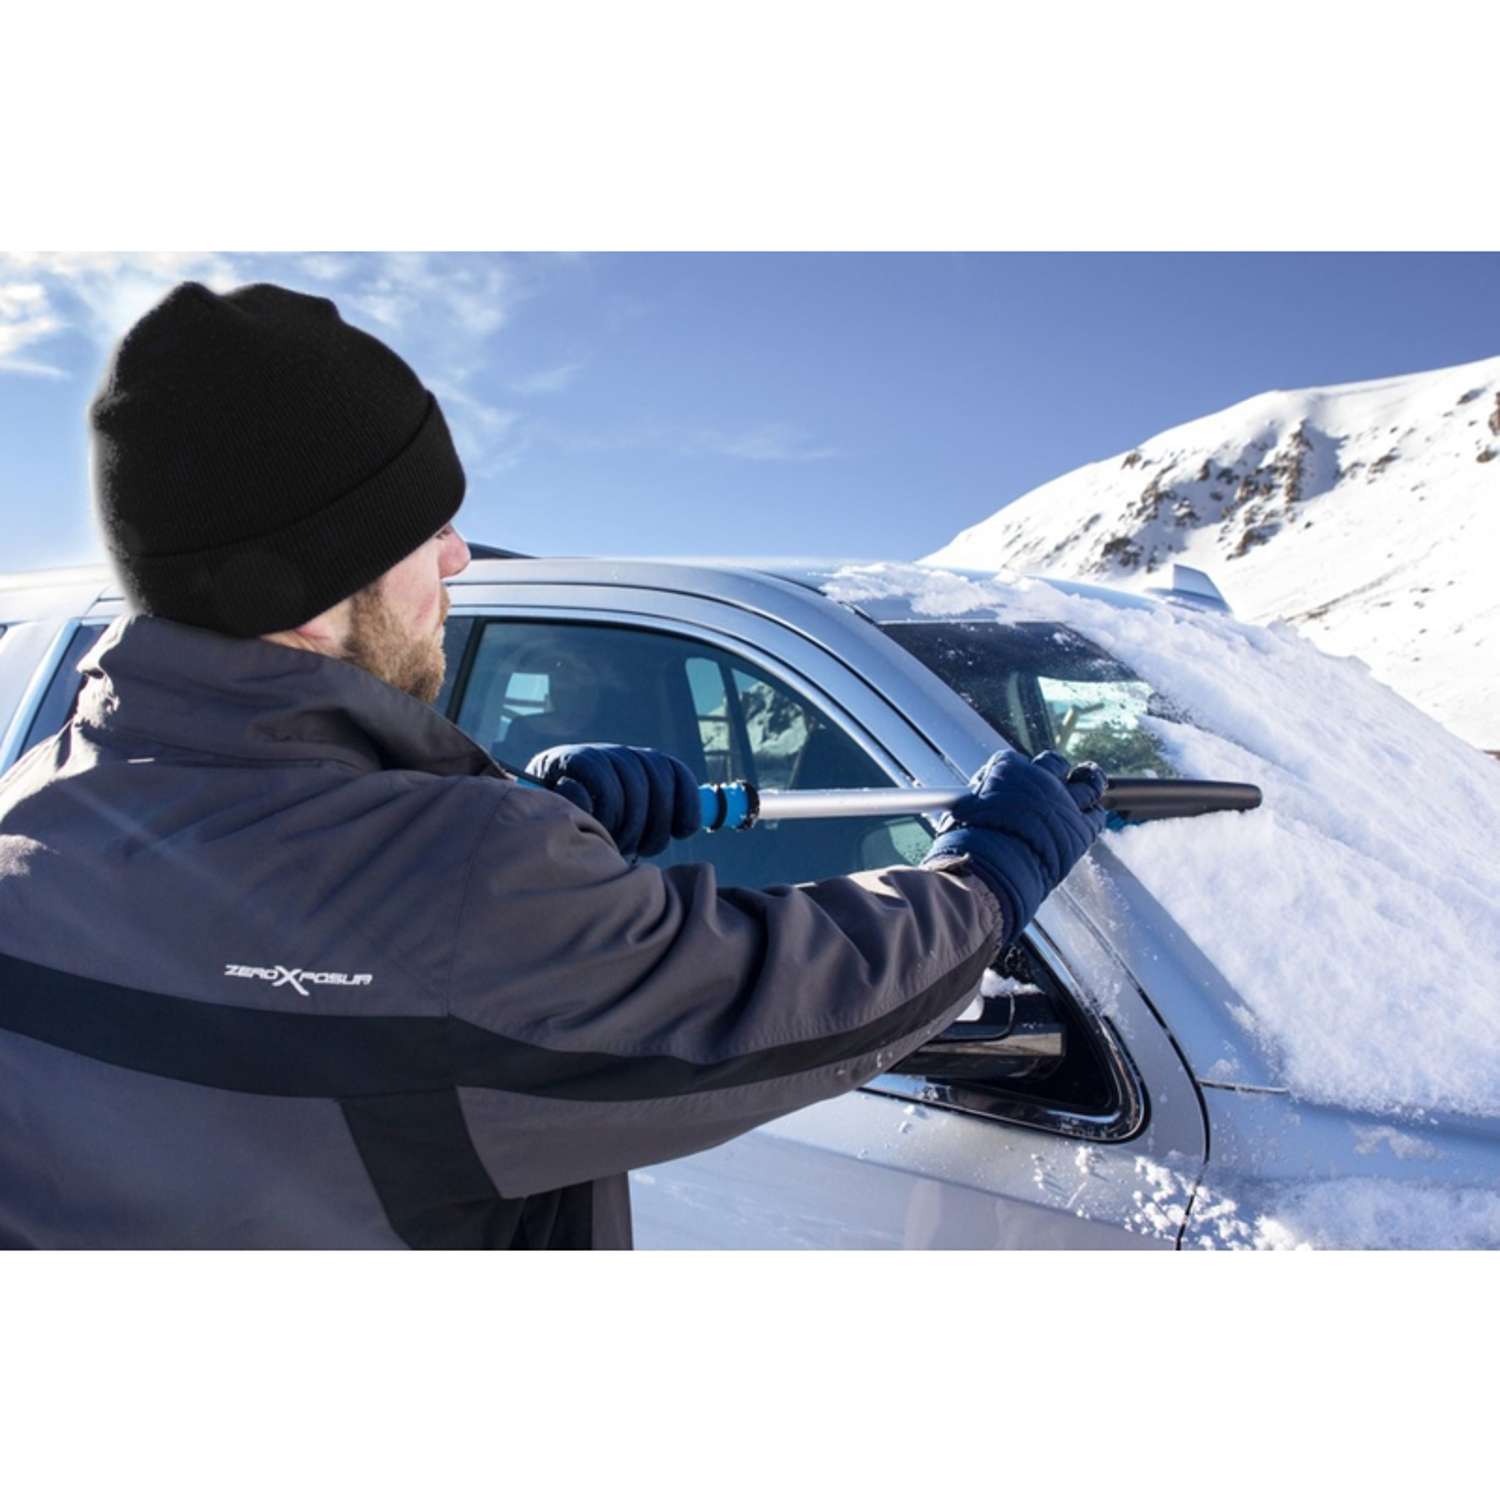 1pc Car Snow Scraper, Ice Scraper, Car Windshield Car Defrost Snow